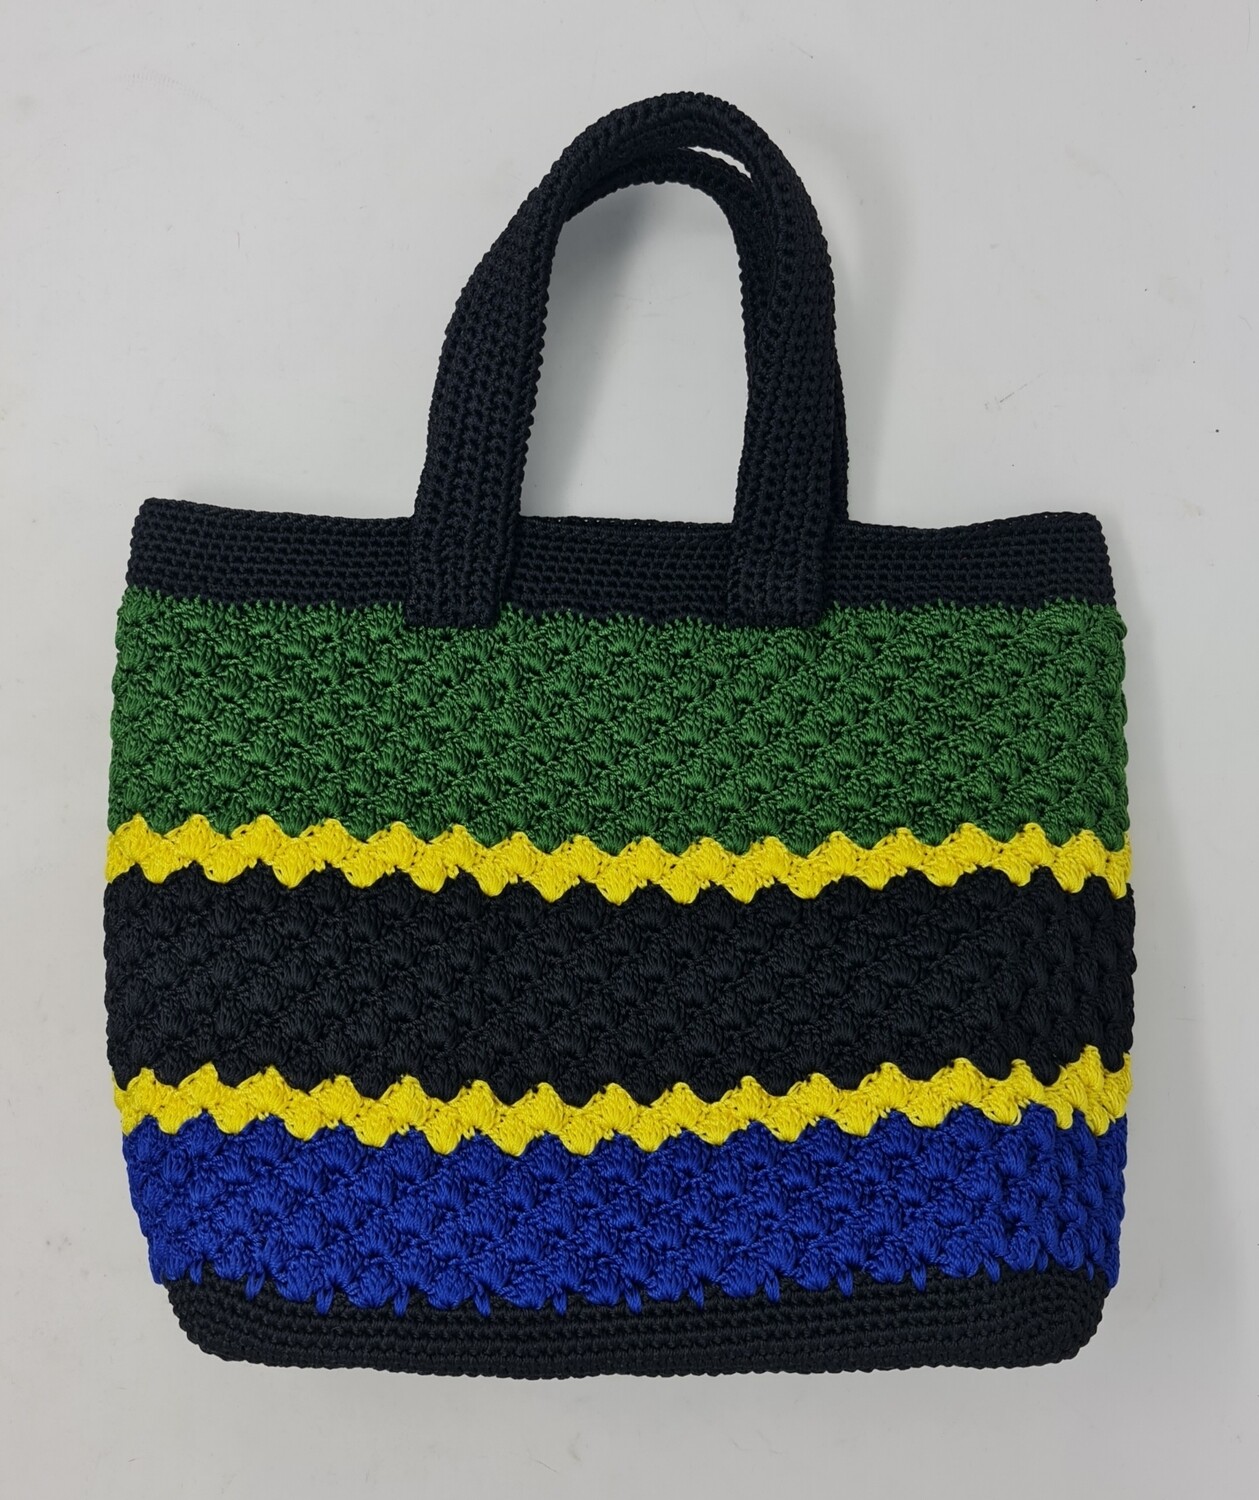 Serengeti - Woven Handbag With Tanzania flag colours